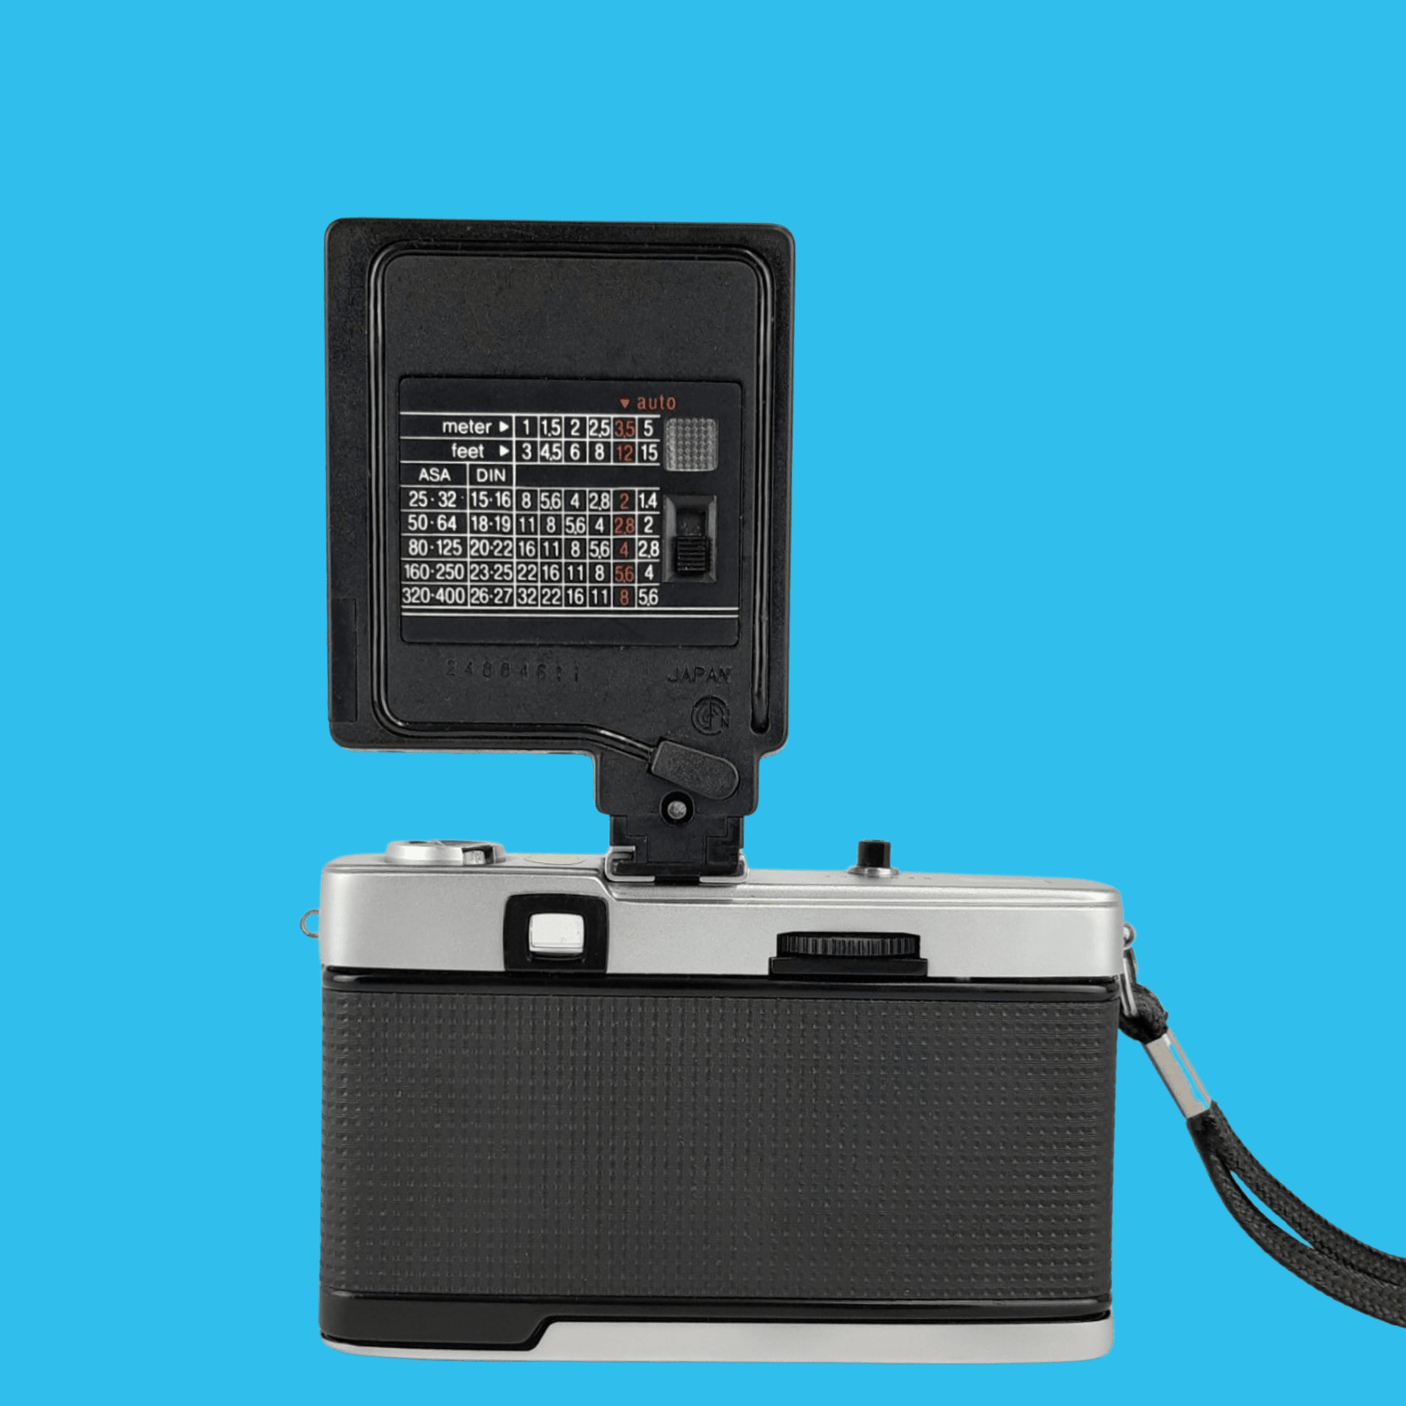 Sunpak Auto14 External Flash Unit for 35mm Film Camera